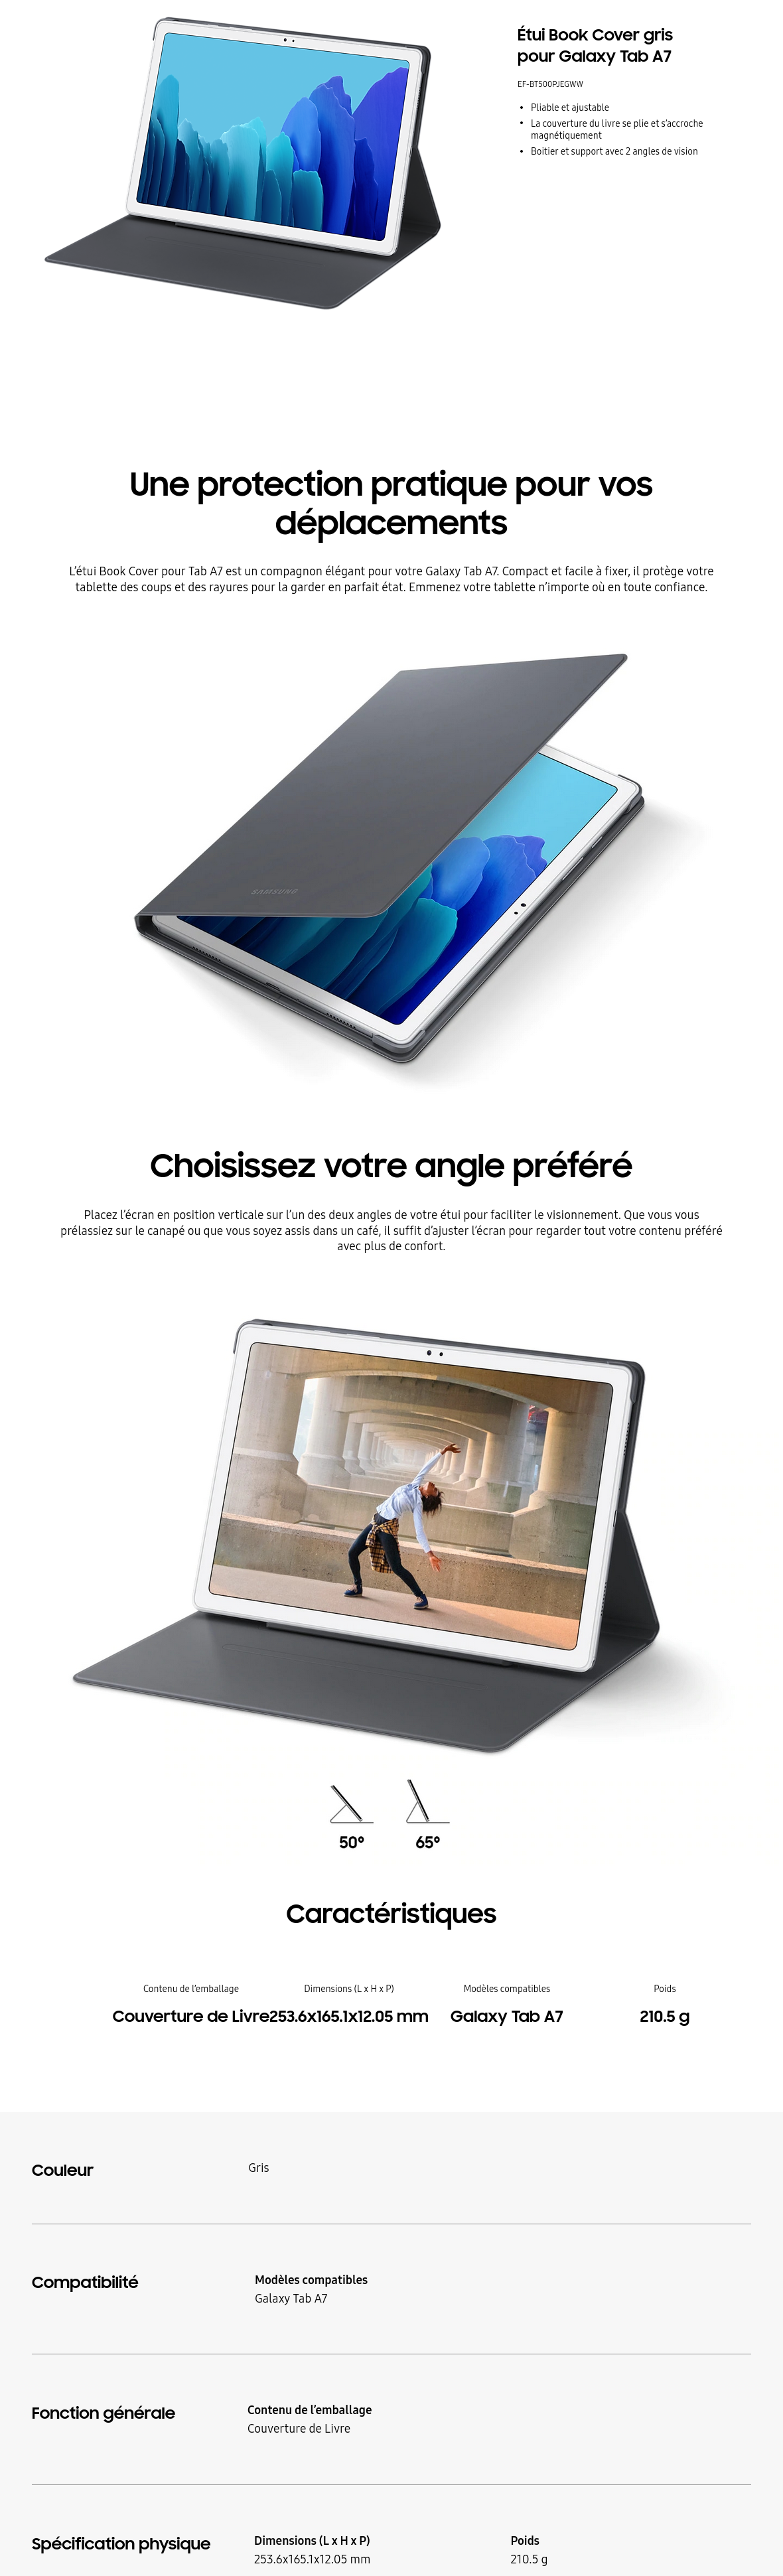 Acheter Samsung Étui Book Cover gris pour Galaxy Tab A7 (EF-BT500PJEGWW) Maroc